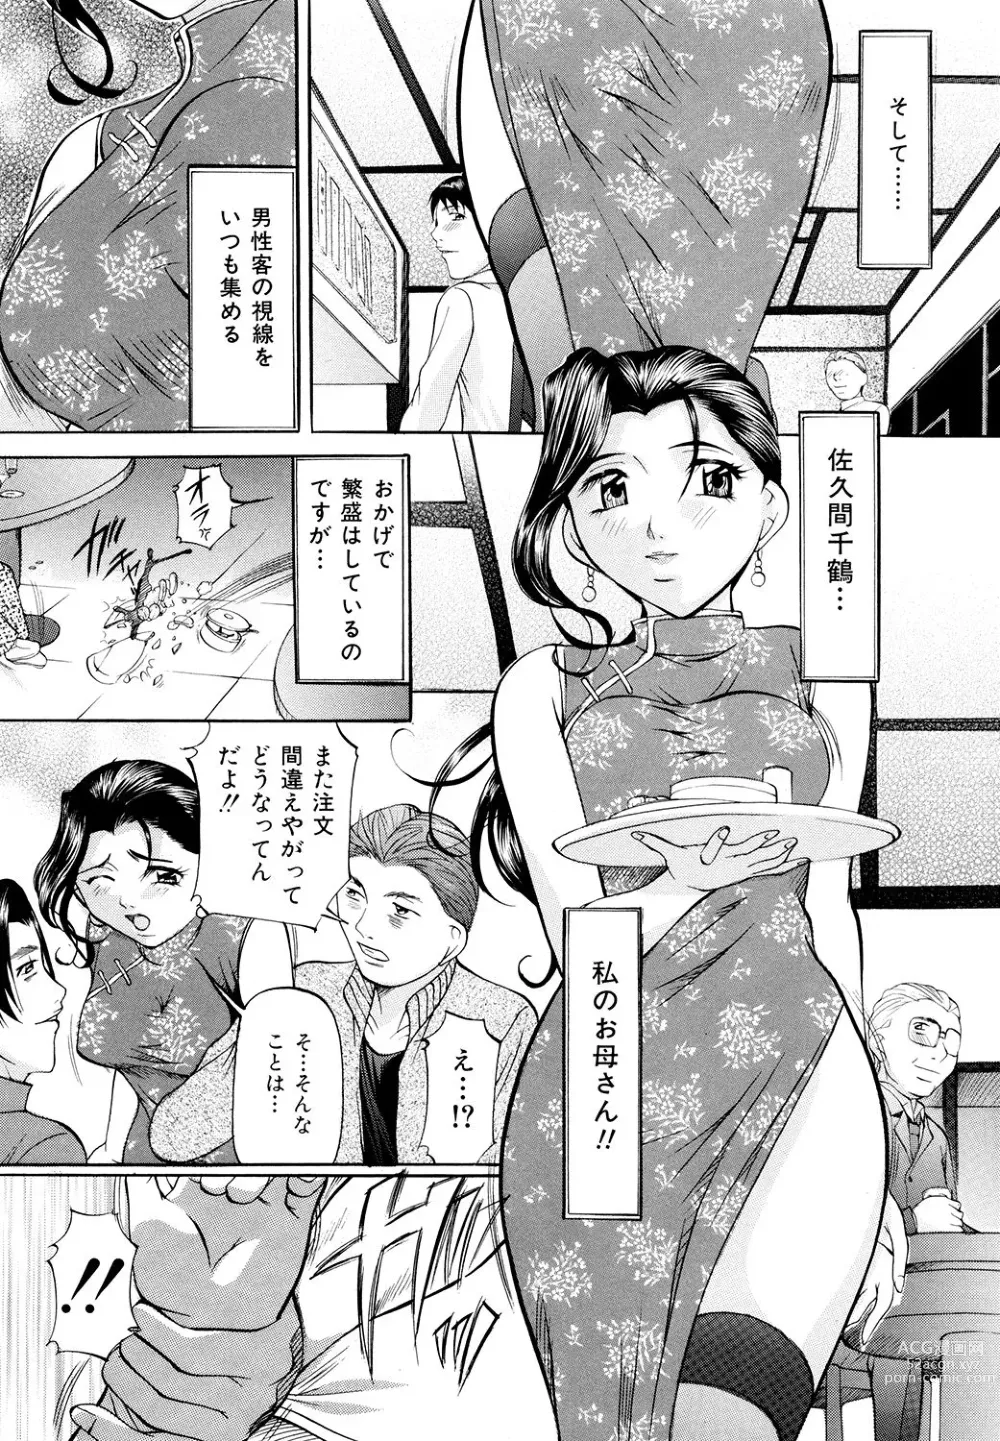 Page 7 of manga Kyonyuu Korogashi